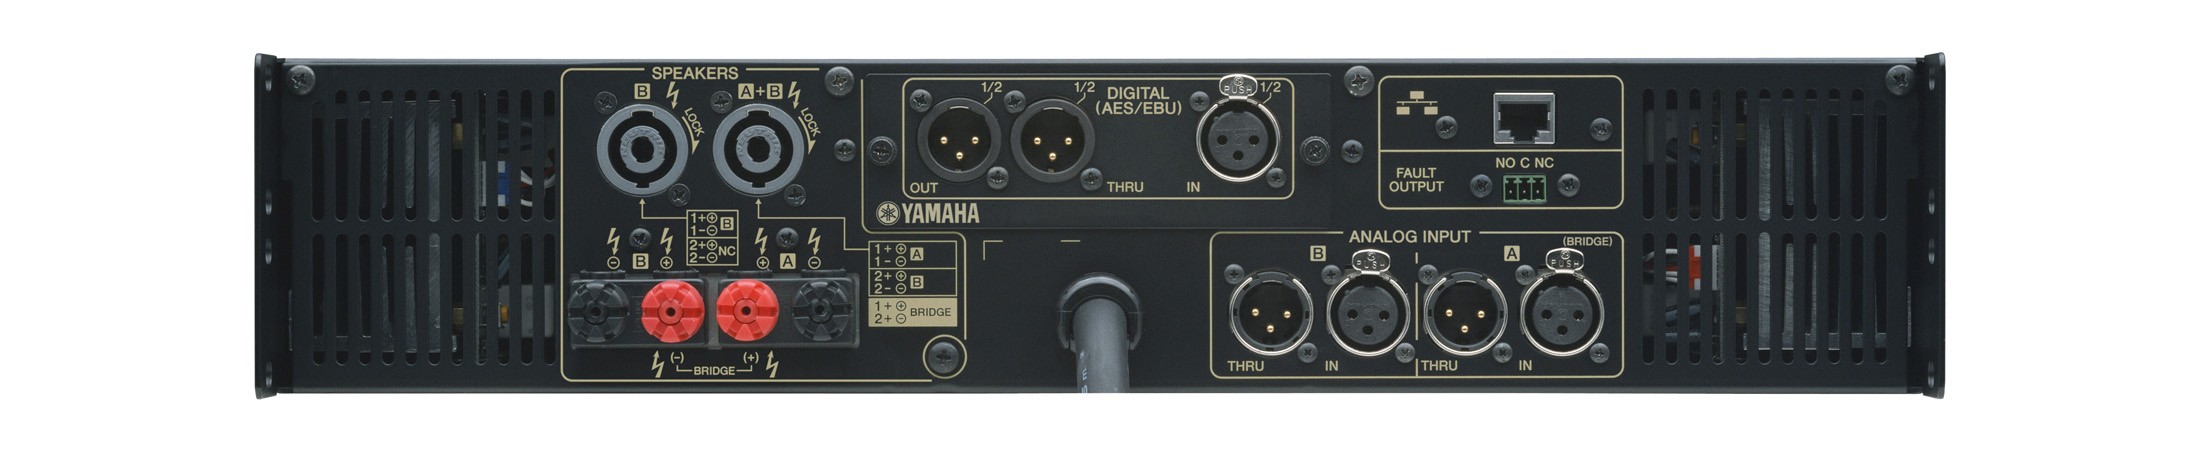 Yamaha TX6n